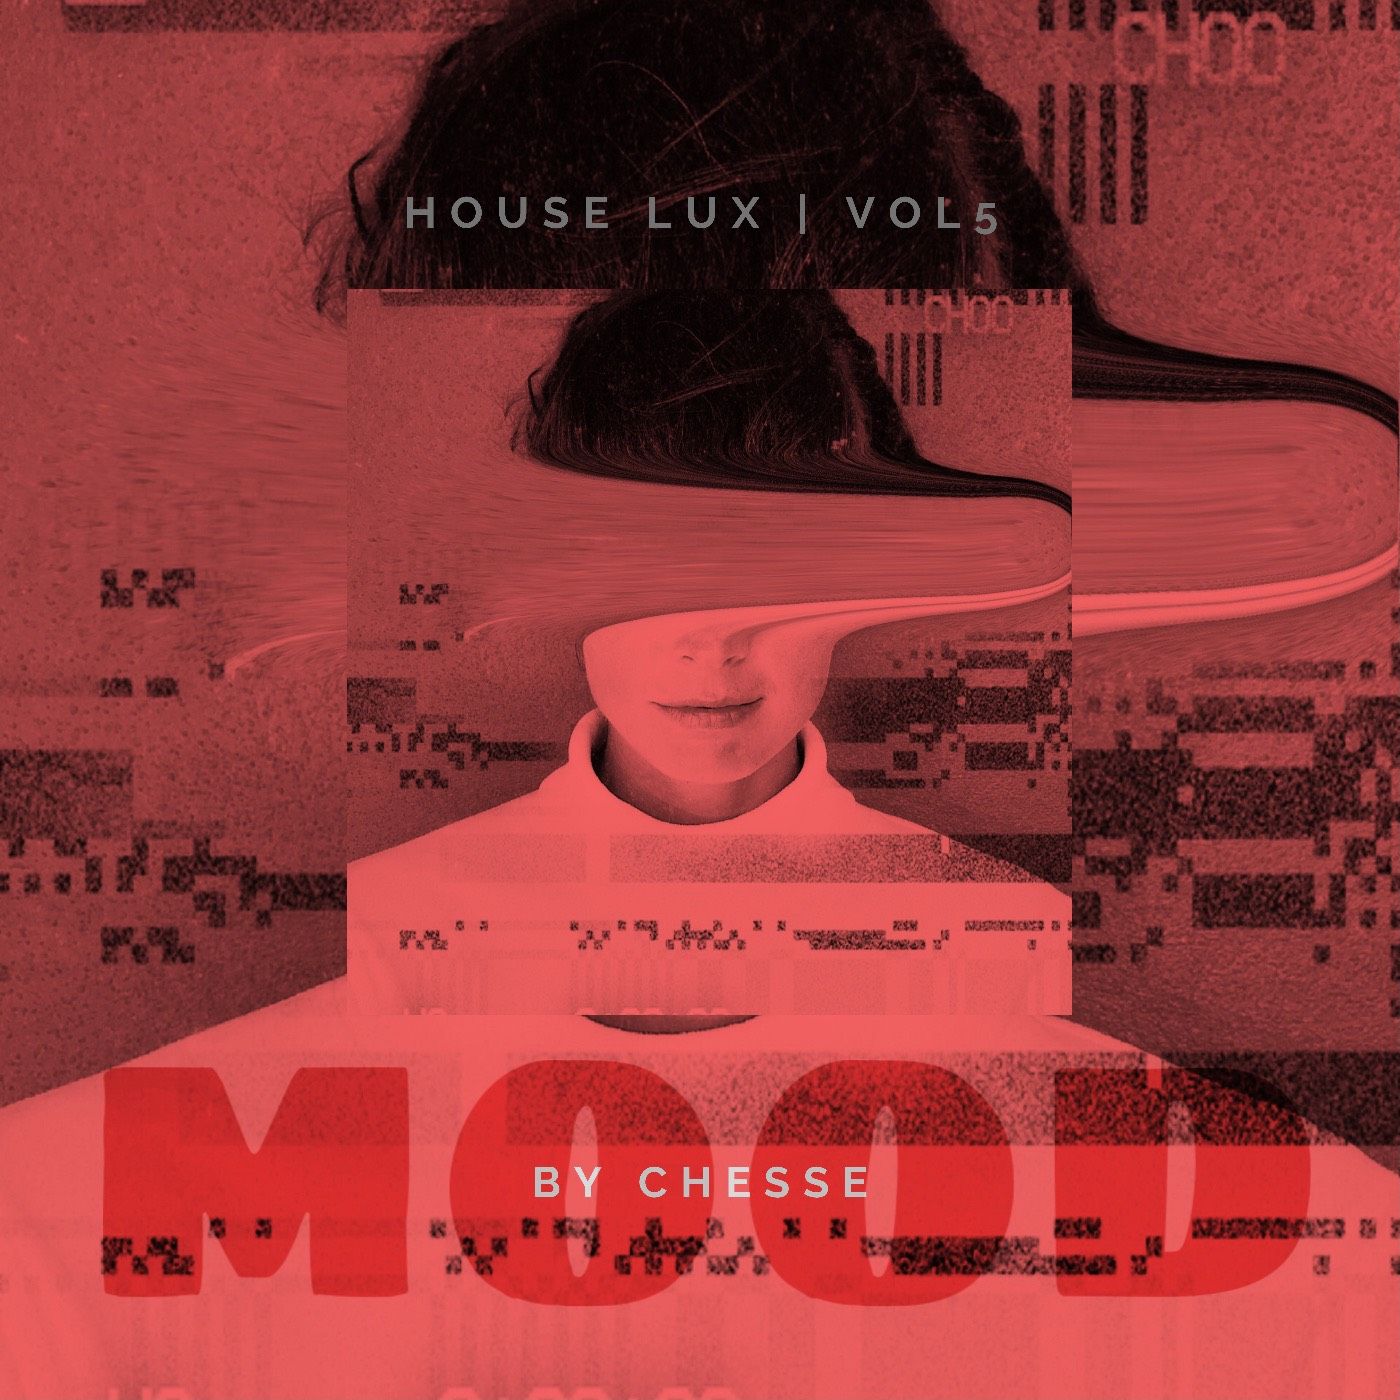 Preuzimanje datoteka MOOD - By Chesse - House lux #005